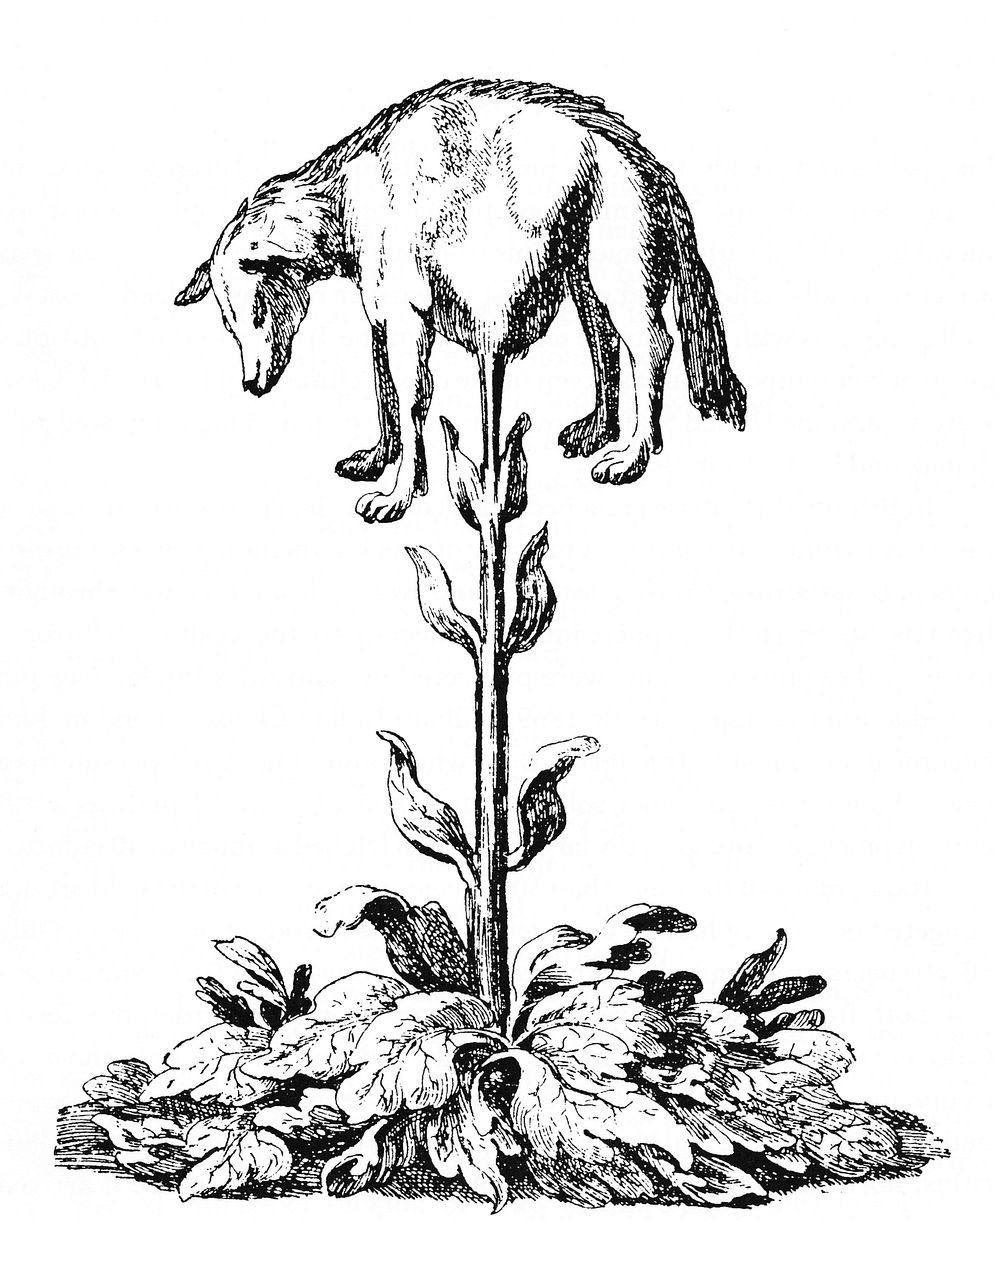 Vegetable lamb (Lee, 1887)